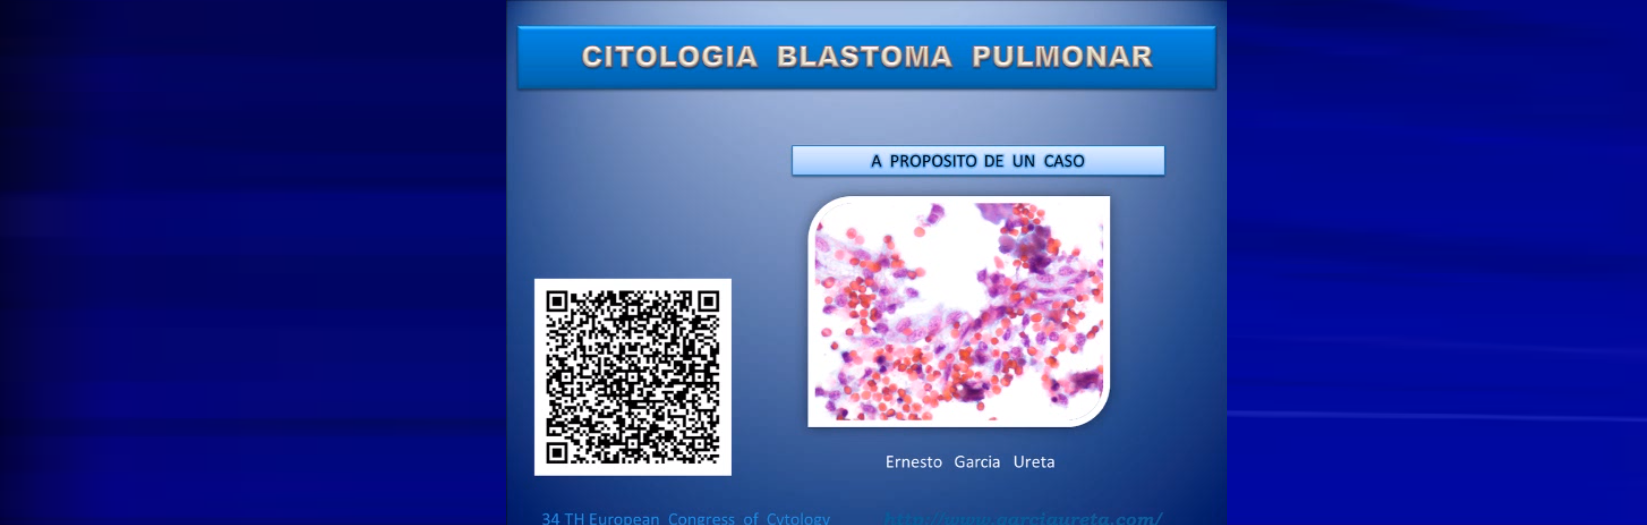 Citología de blastoma pulmonar